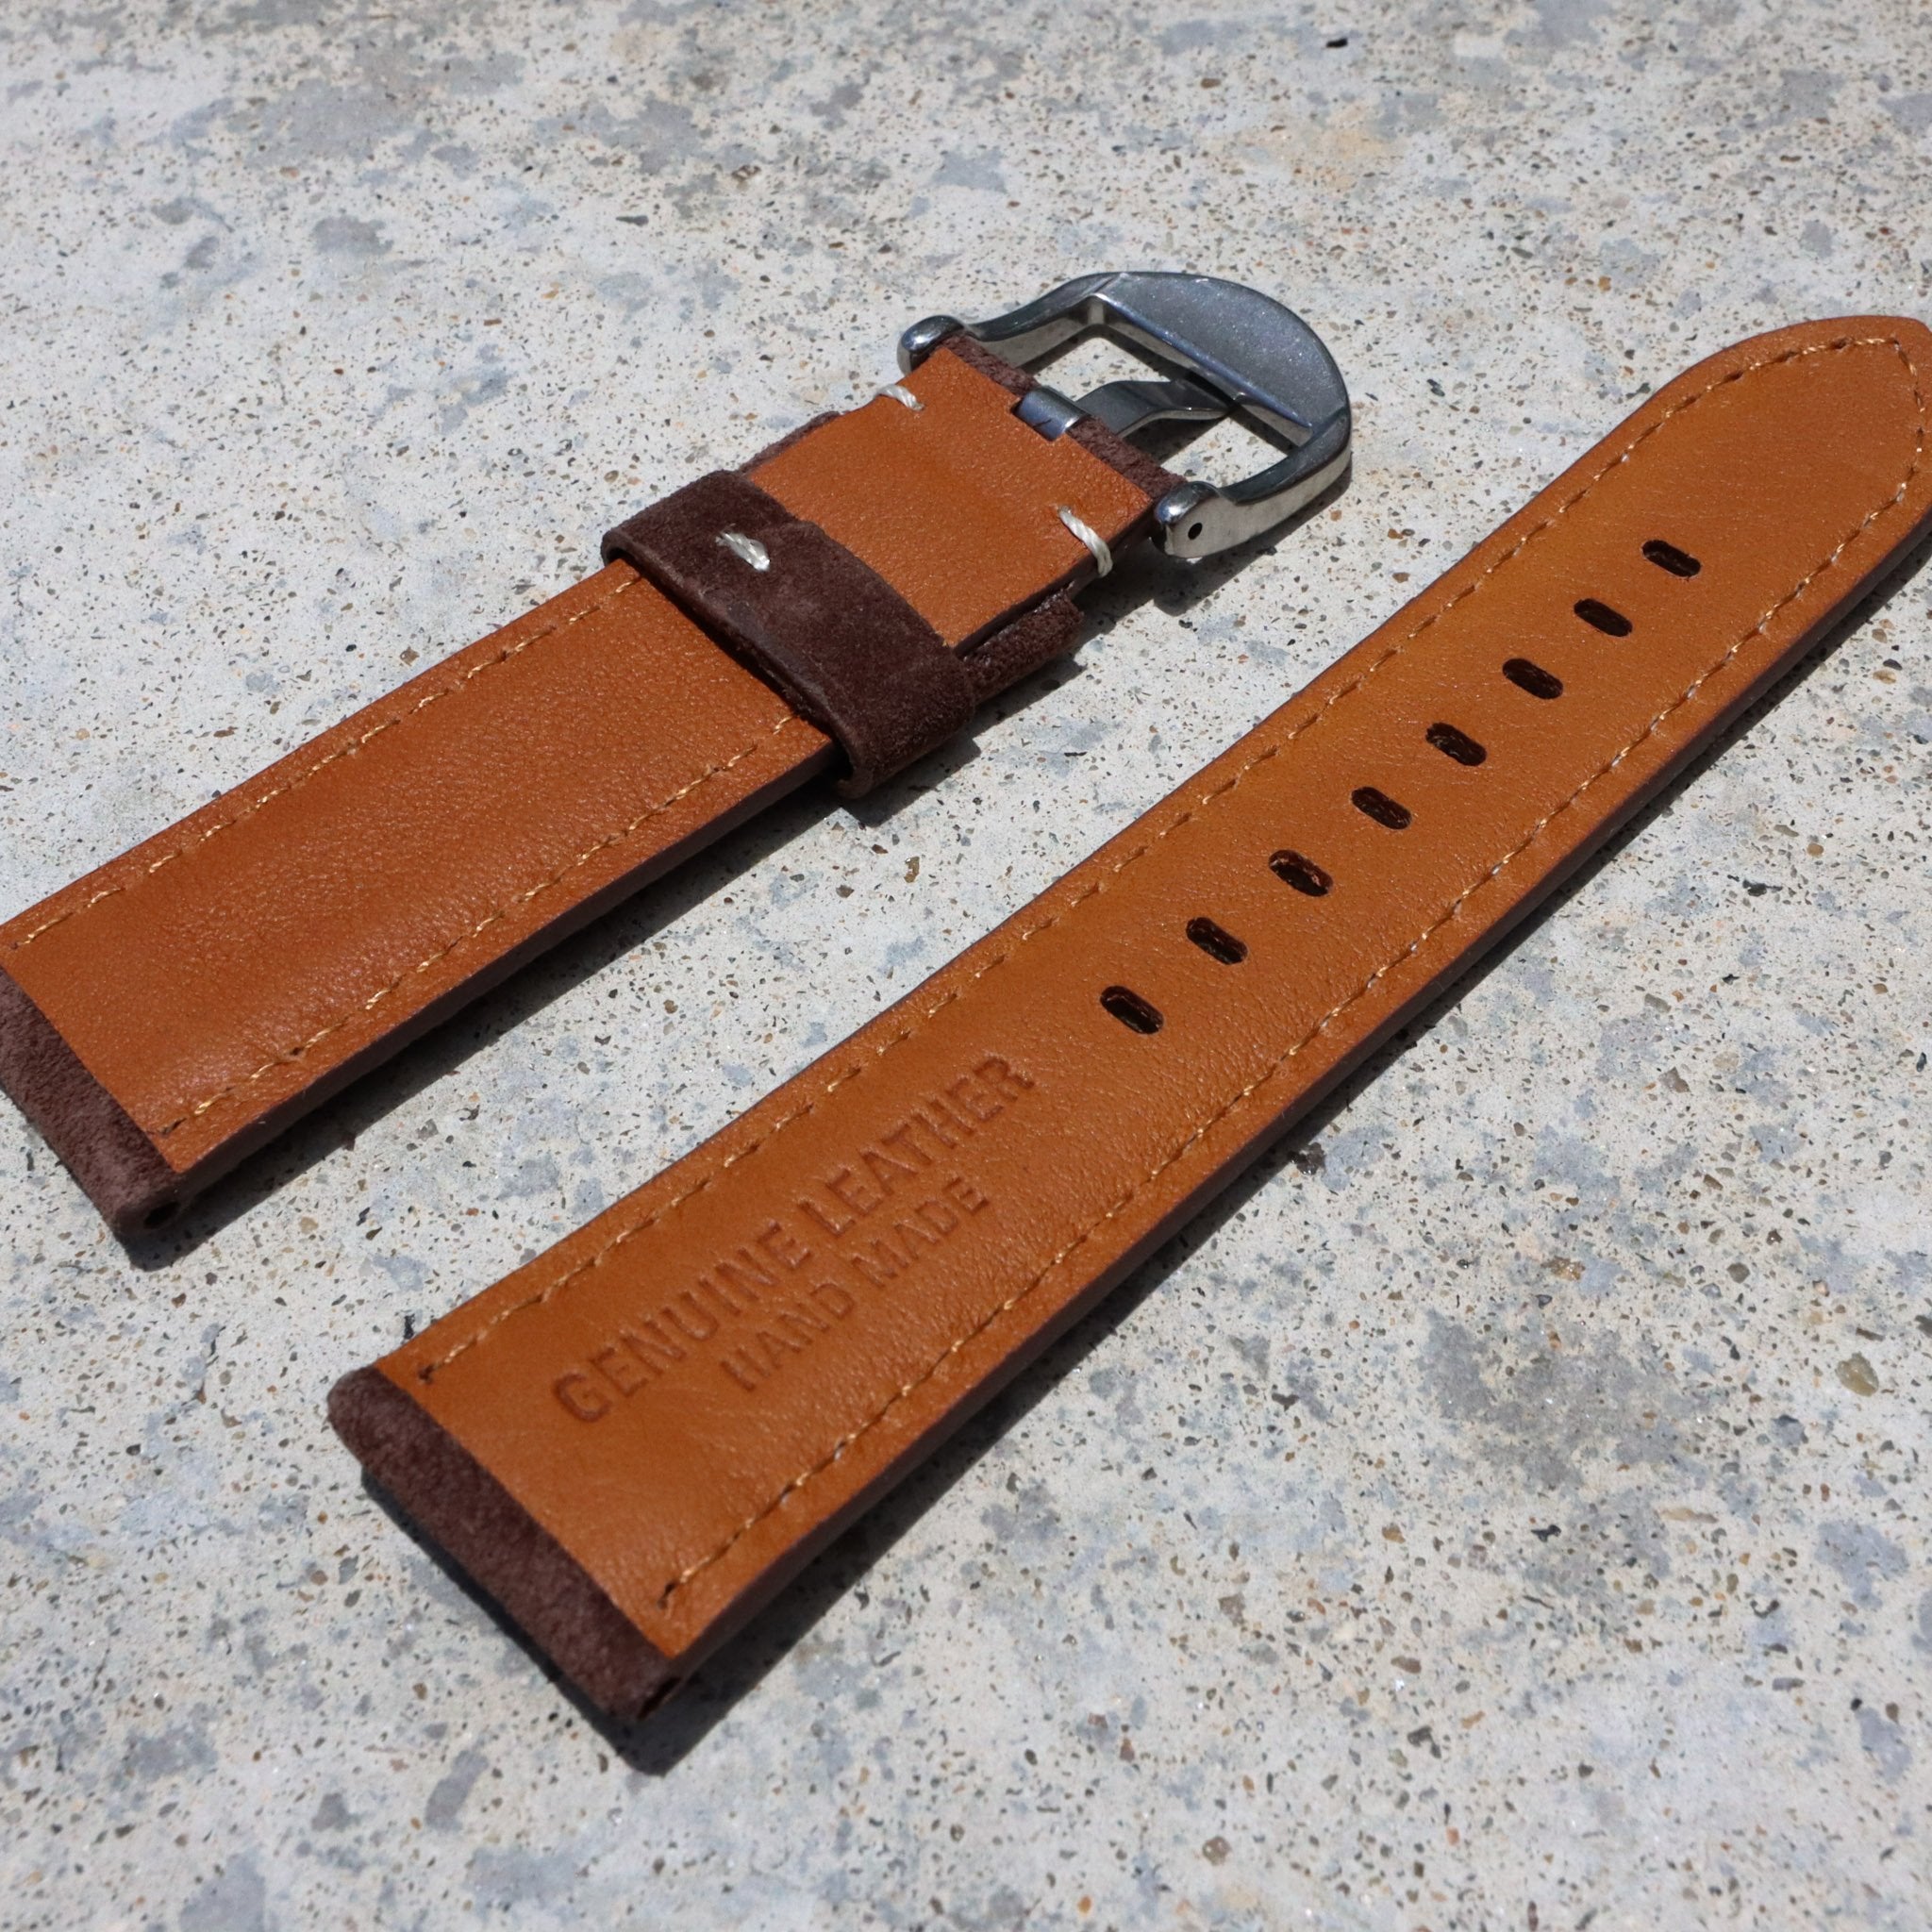 Mocha Brown Suede w/ White Stitches | Calfskin Italian Leather Watch Strap - Samurai Vintage Co.